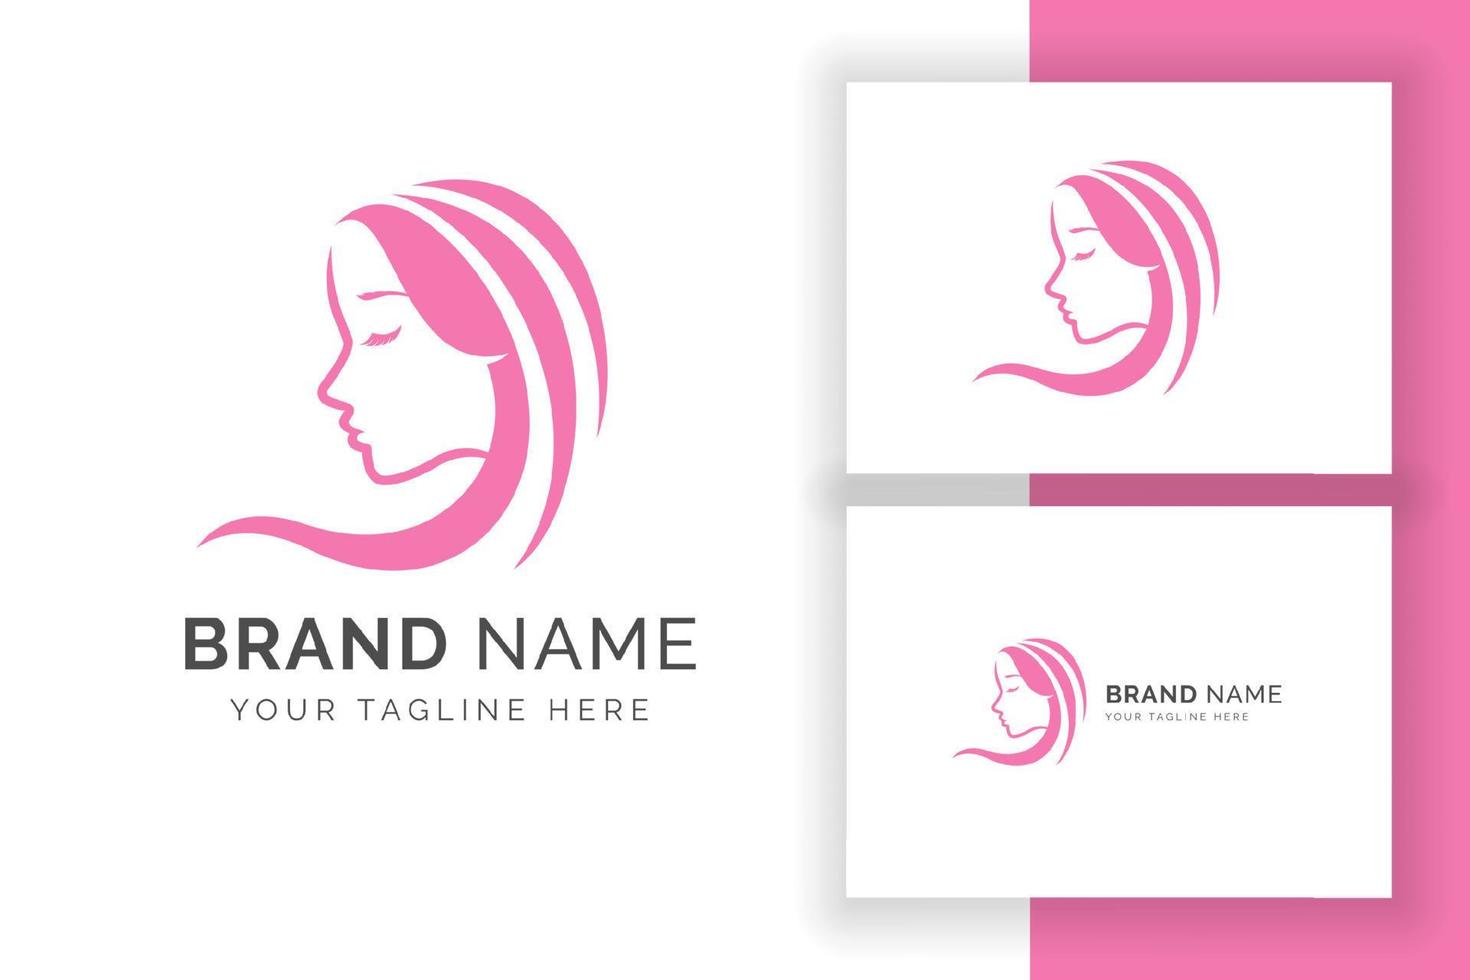 beauty woman head silhouette logo design template vector